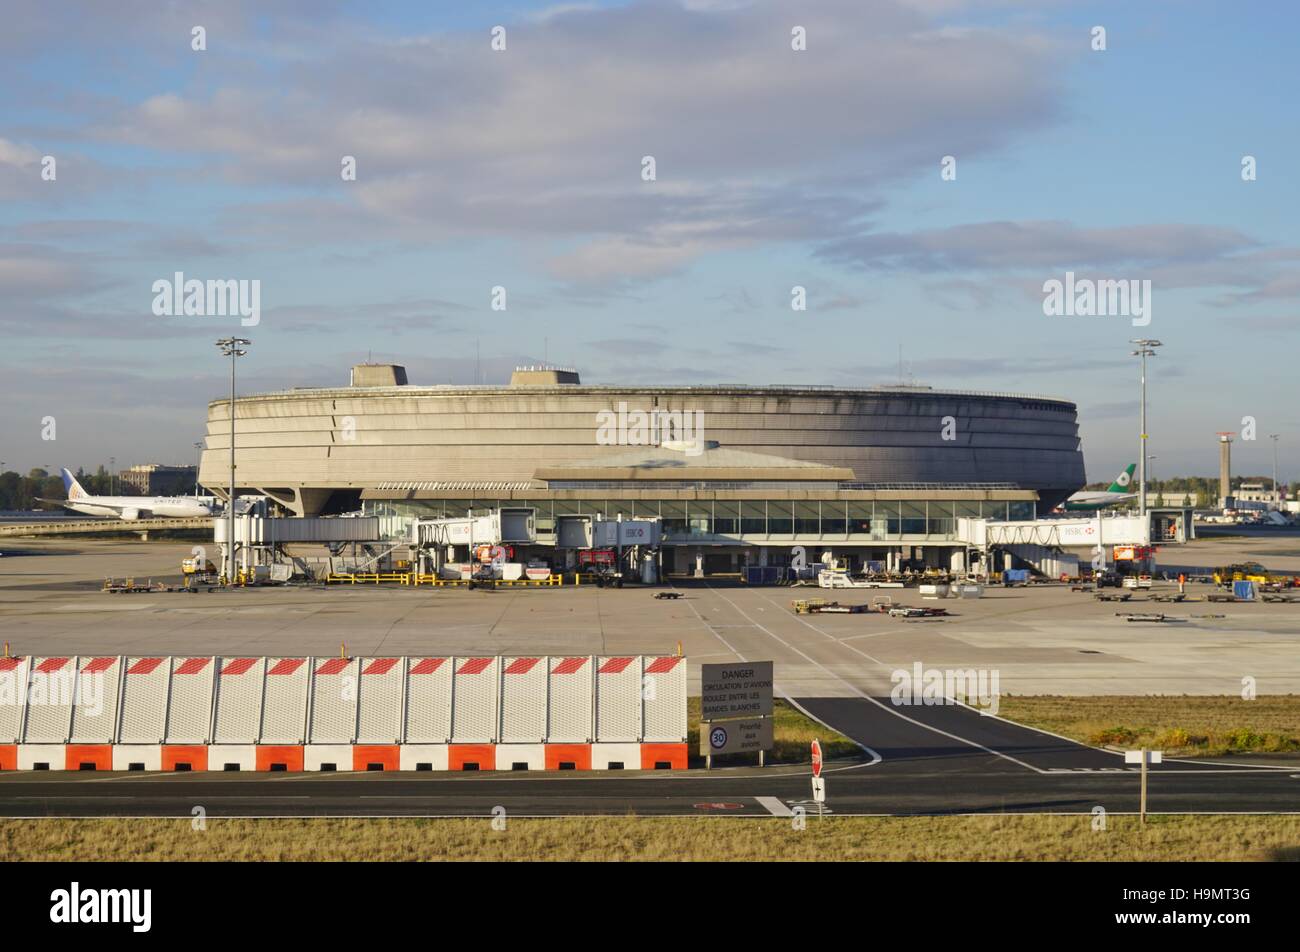 Getting around Terminal 2 on foot - CHARLES DE GAULLE AIRPORT (Paris CDG)